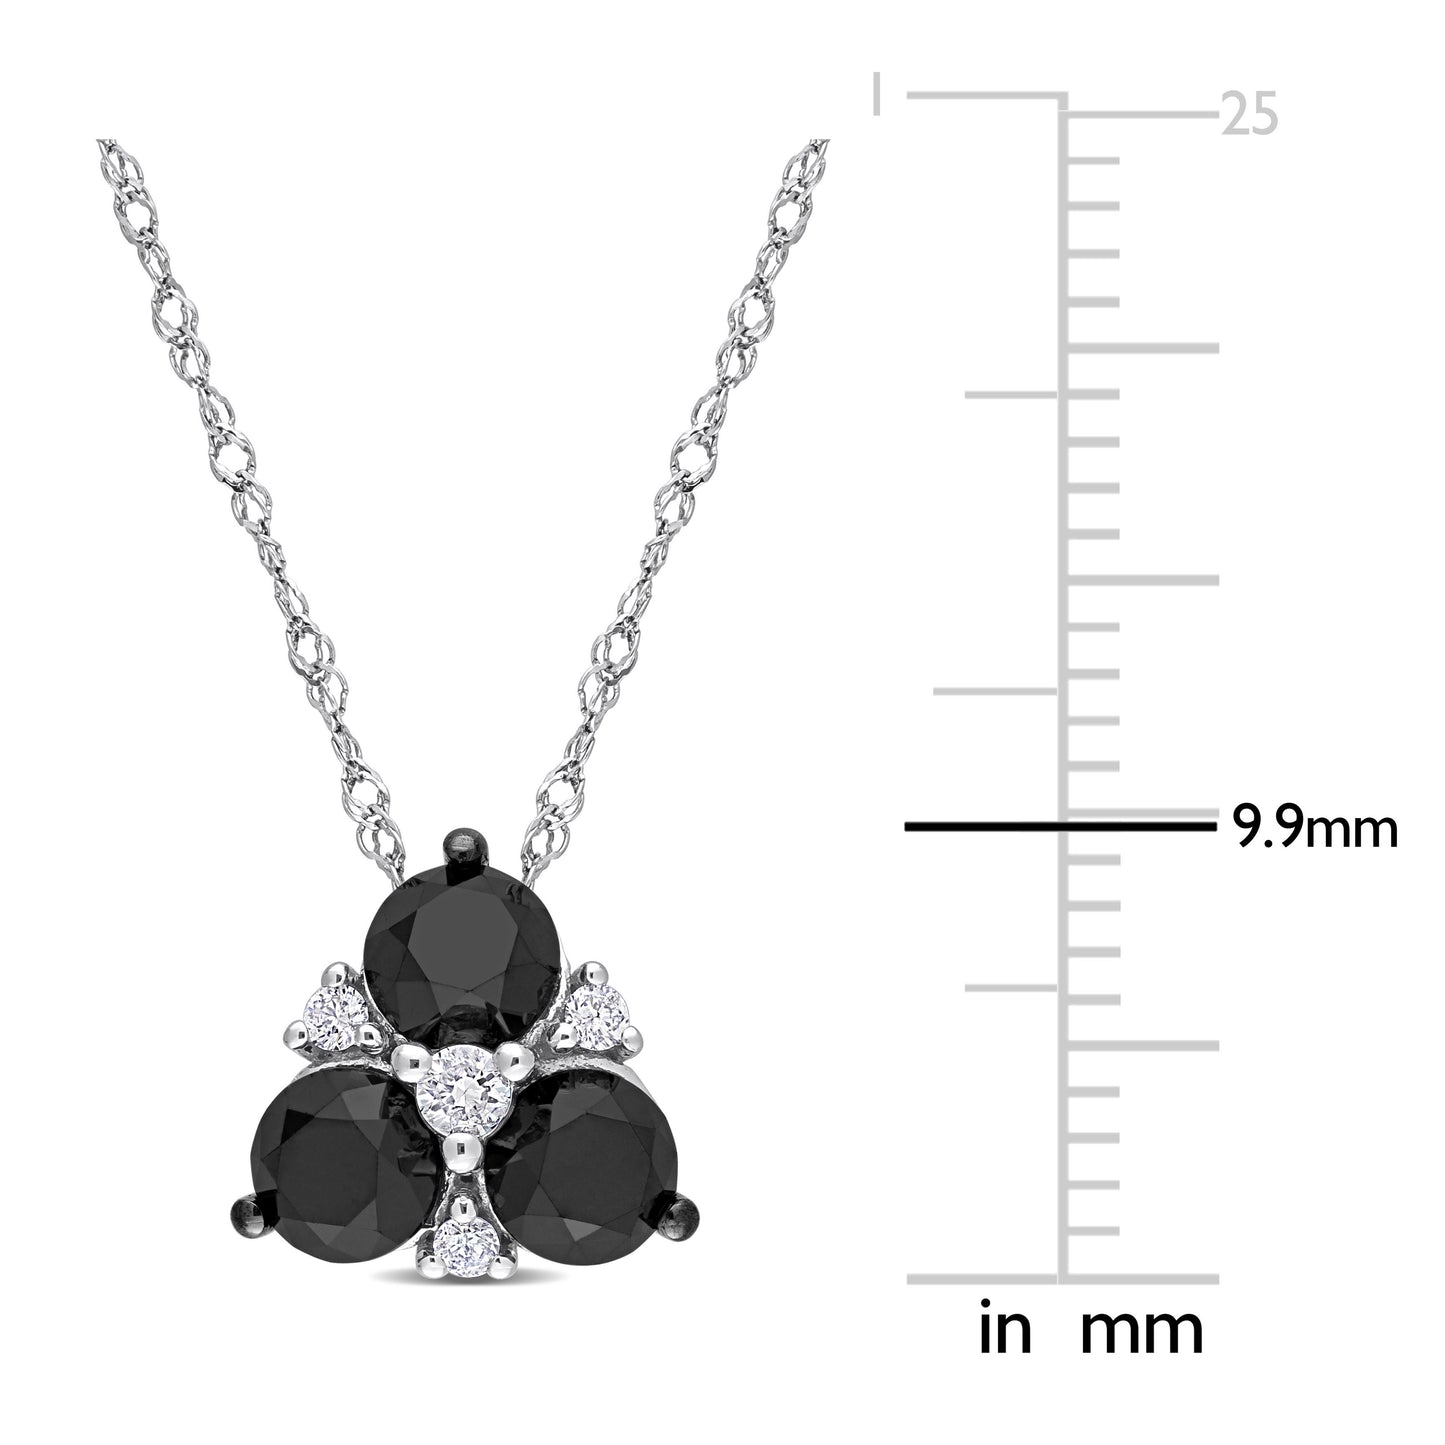 Black & White Diamond Cluster Necklace in 10k White Gold